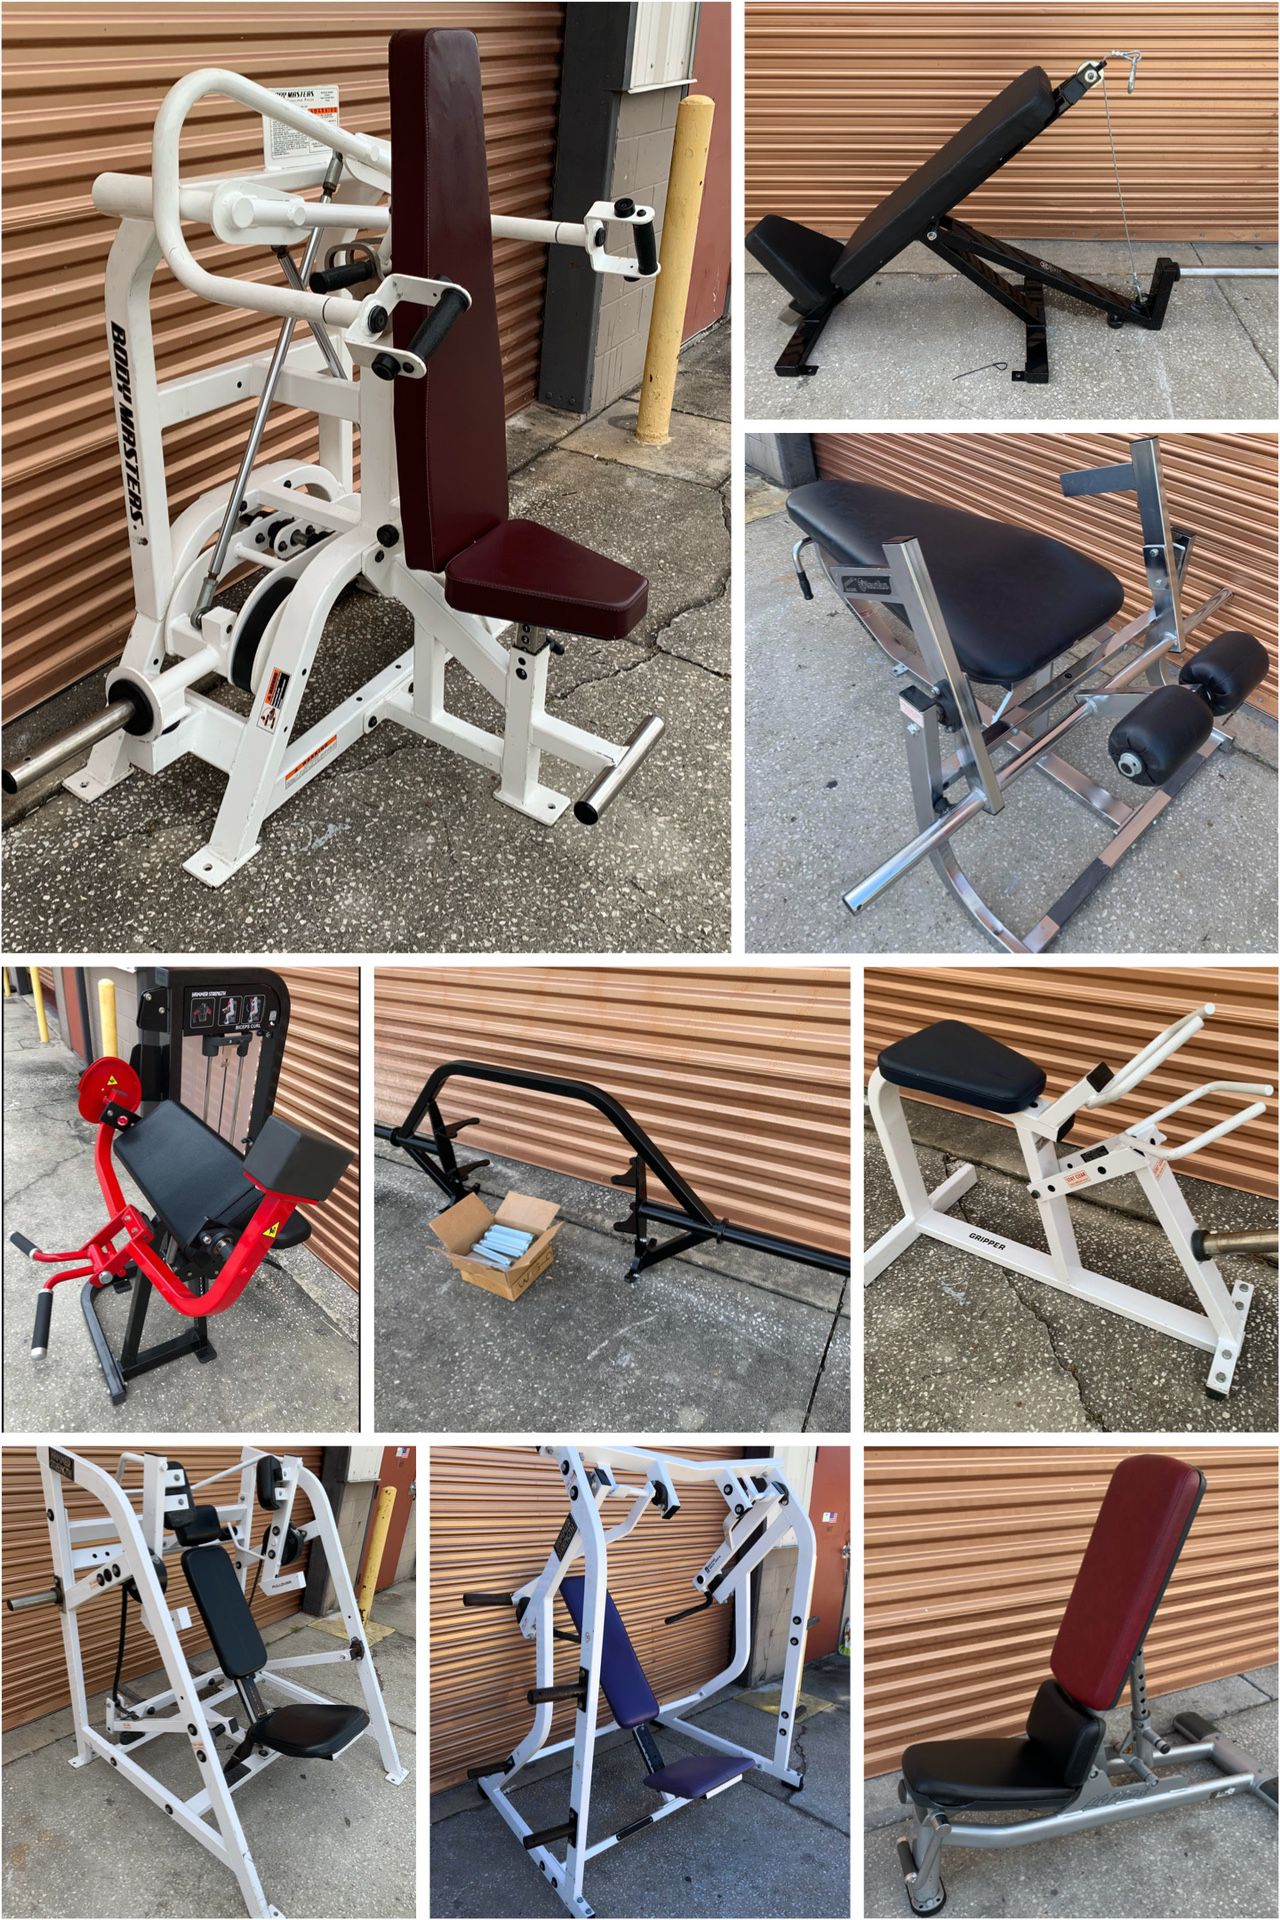 Shoulder Press, Bicep Curl, Hex /Trap Bar, Bumper Plates, Olympic Weight Bench, Treadmill, Elliptical, Smith Machin